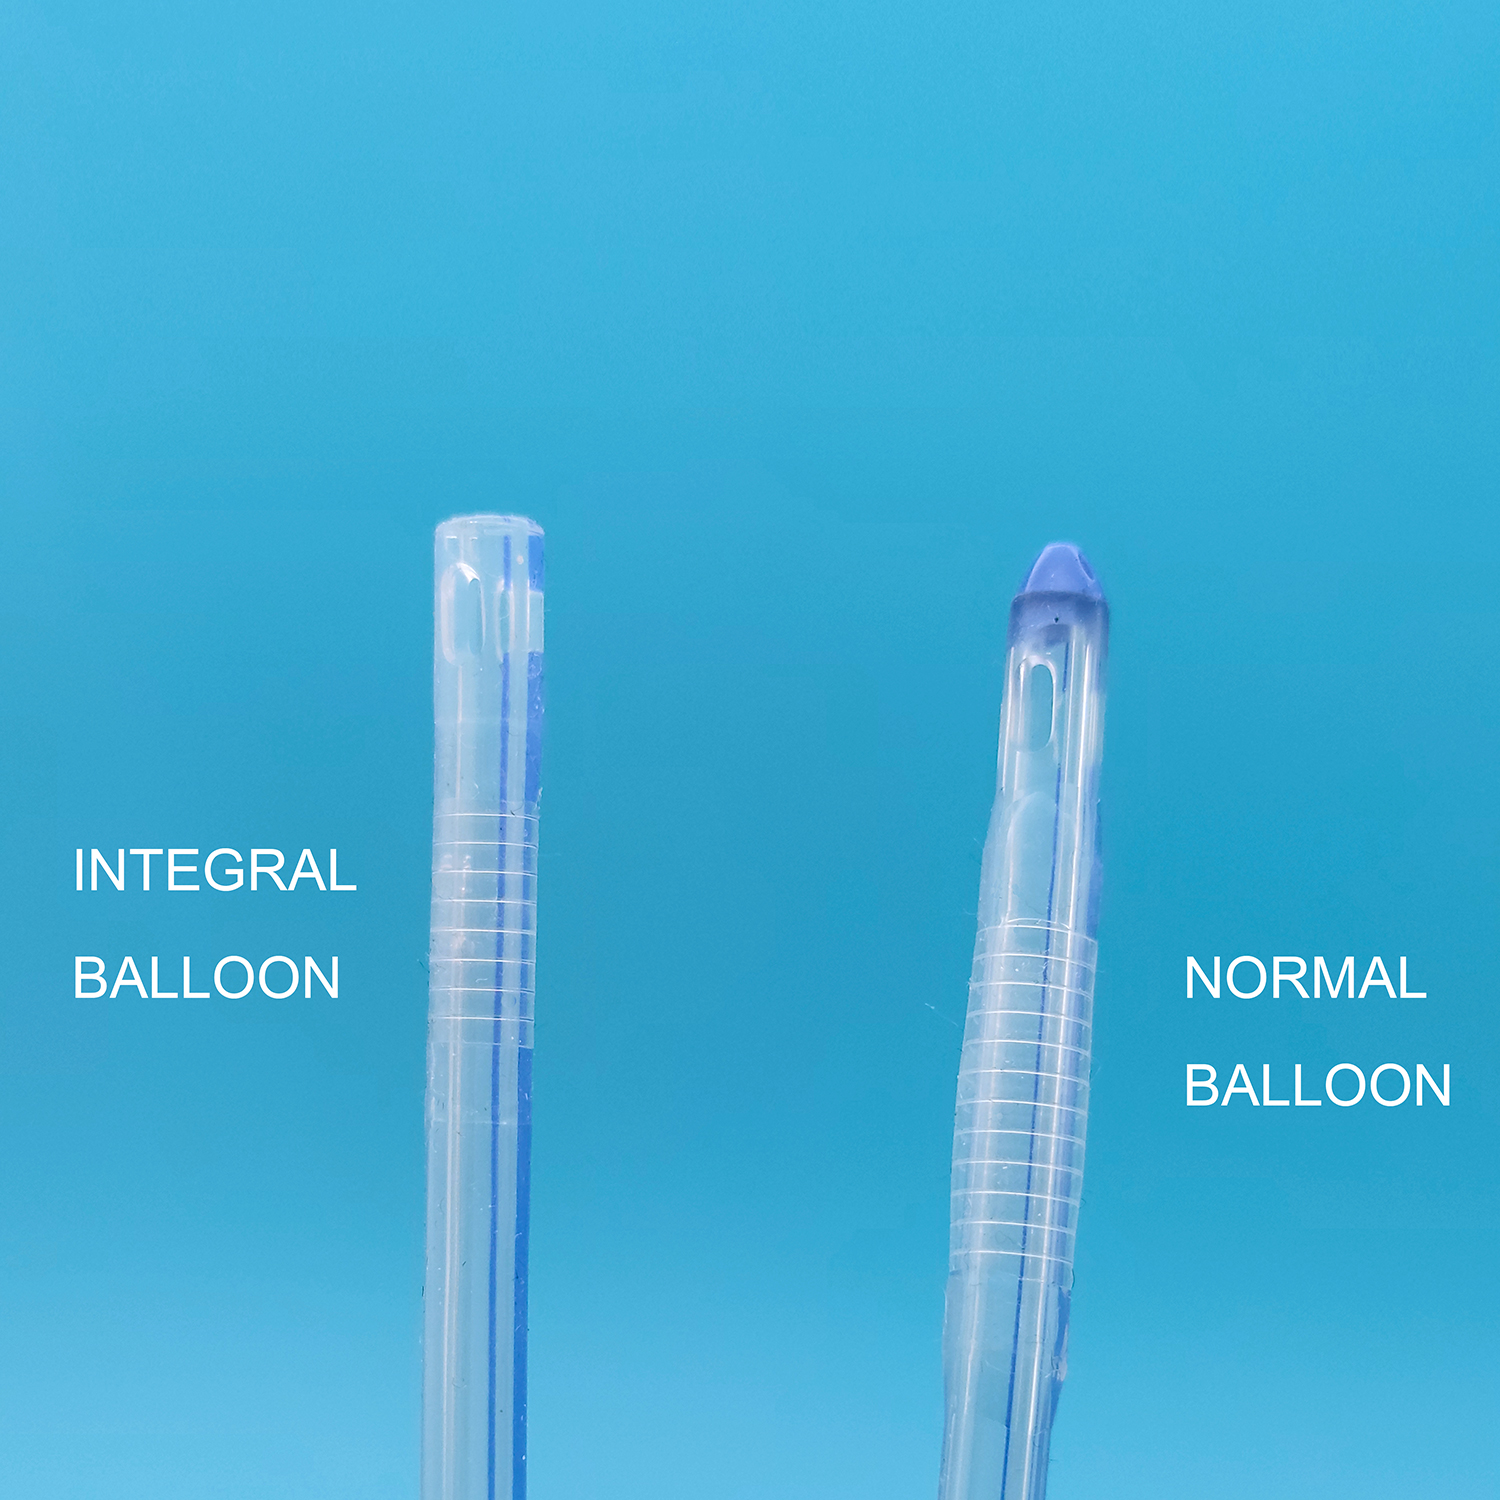 Kateter Foley Silikon Transparan atau Biru 2 Arah dengan Teknologi Balon Integral Unibal Balon Datar Terintegrasi Penggunaan Suprapubik Berujung Terbuka Tengah